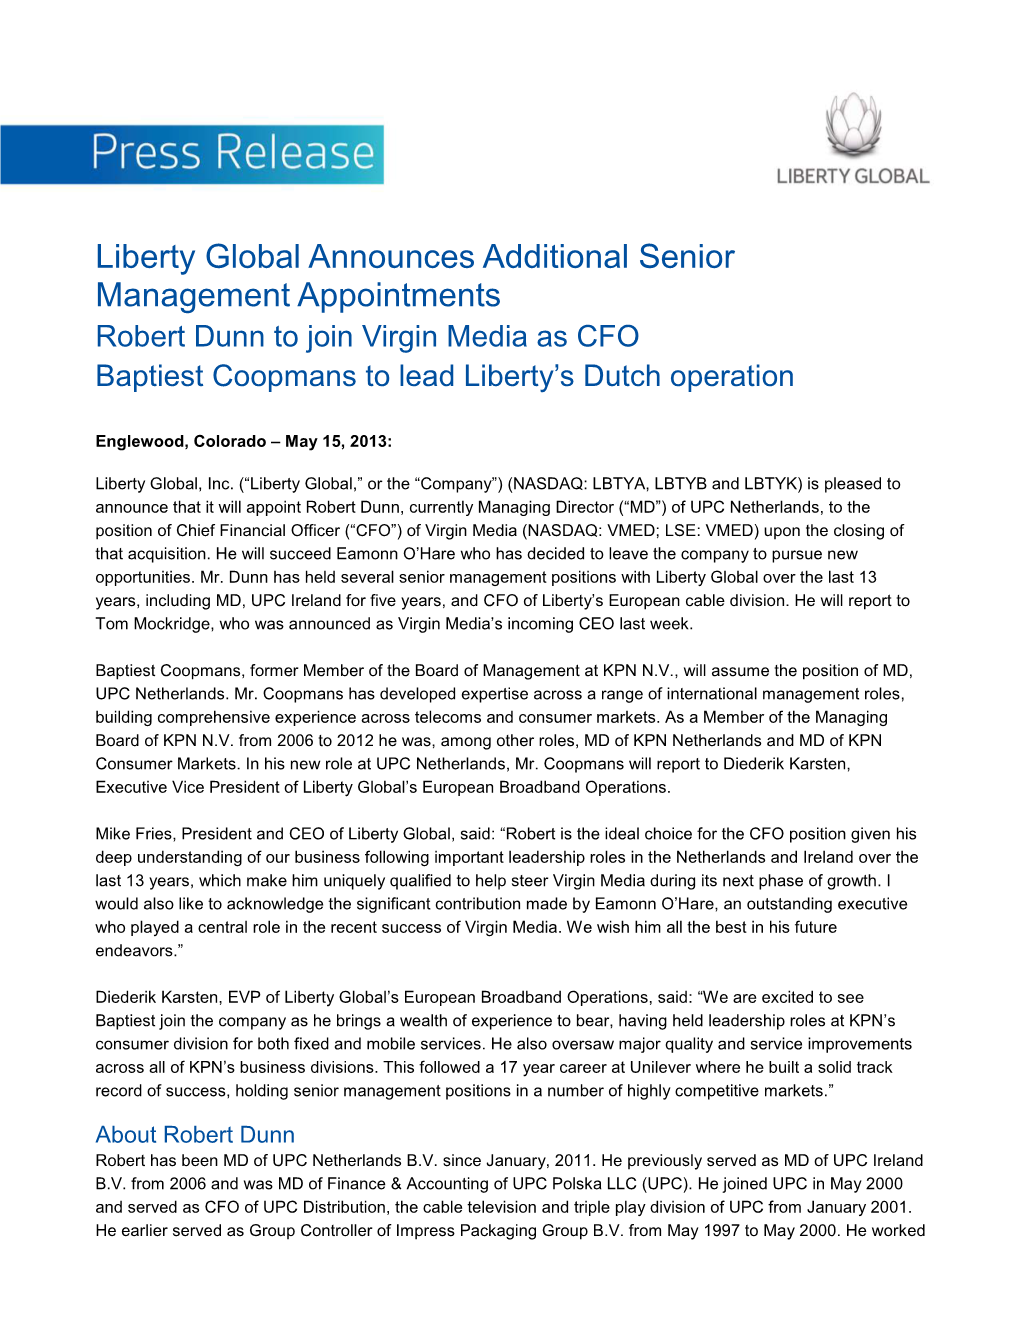 Robert Dunn to Join Virgin Media As CFO Baptiest Coopmans to Lead Liberty's Dutch Operation